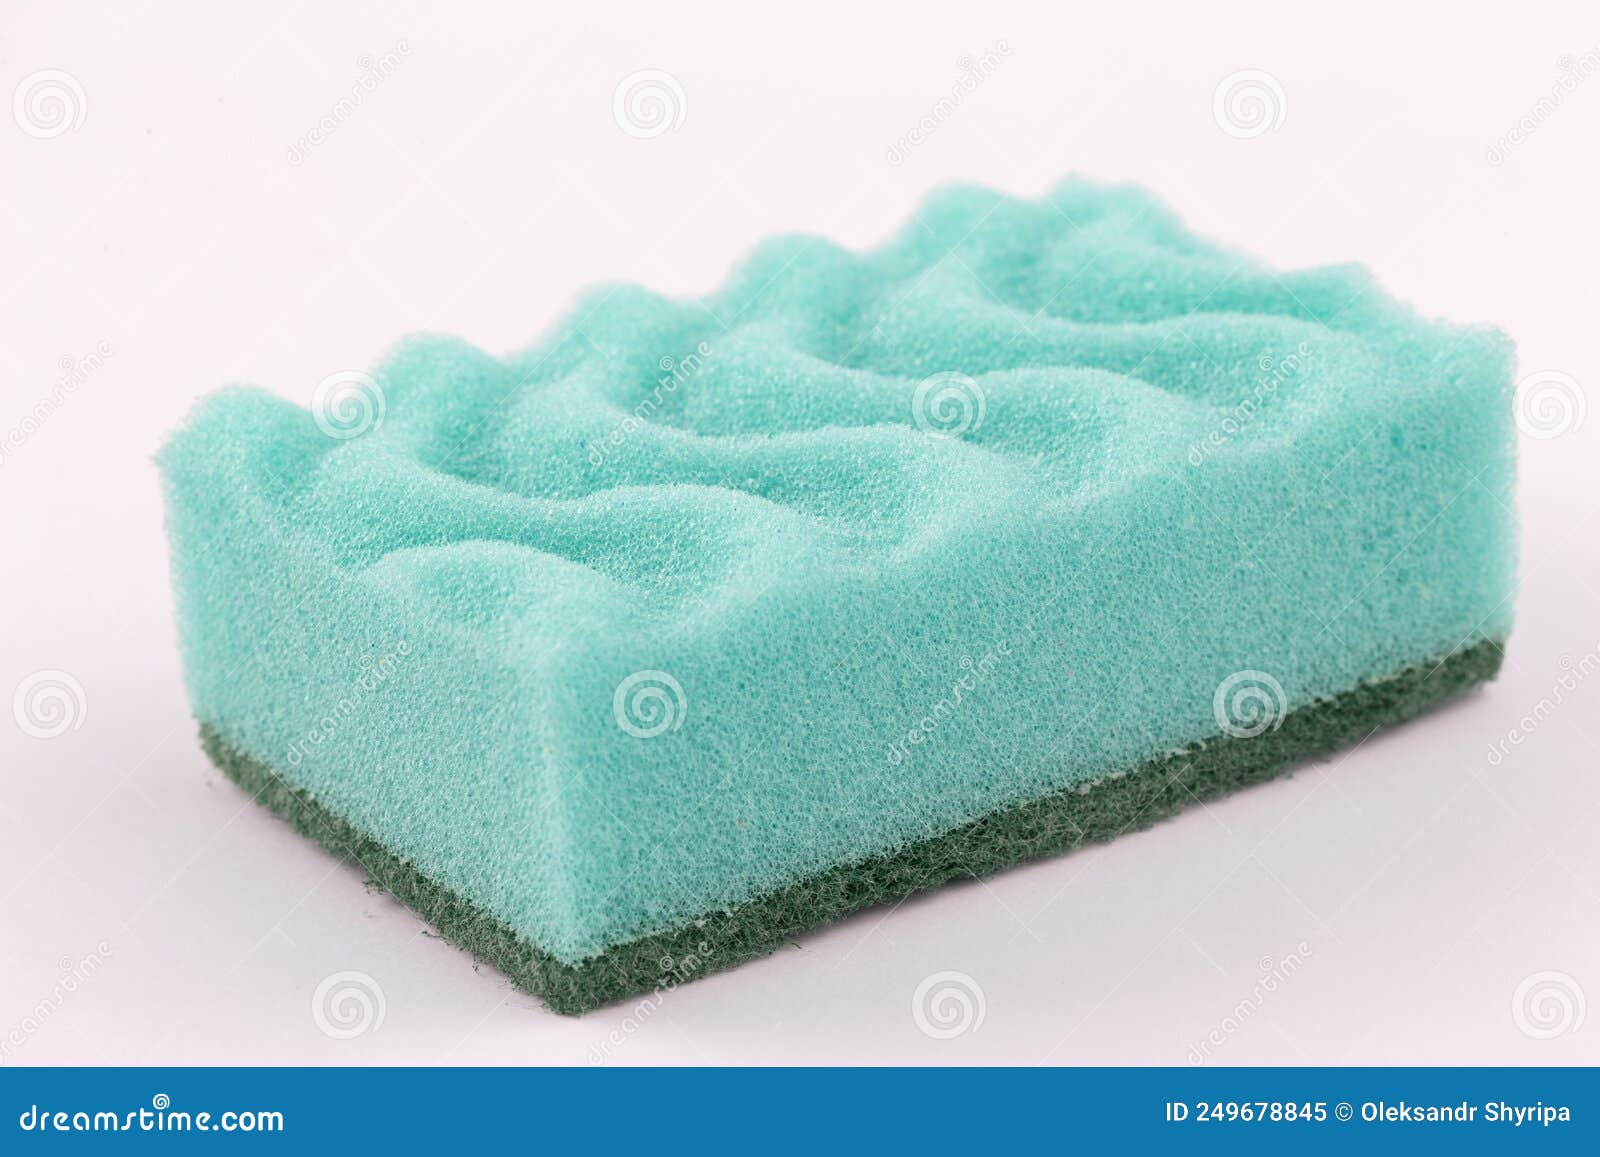 https://thumbs.dreamstime.com/z/esponja-de-espuma-verde-para-lavar-platos-que-se-cierran-sobre-un-fondo-blanco-249678845.jpg